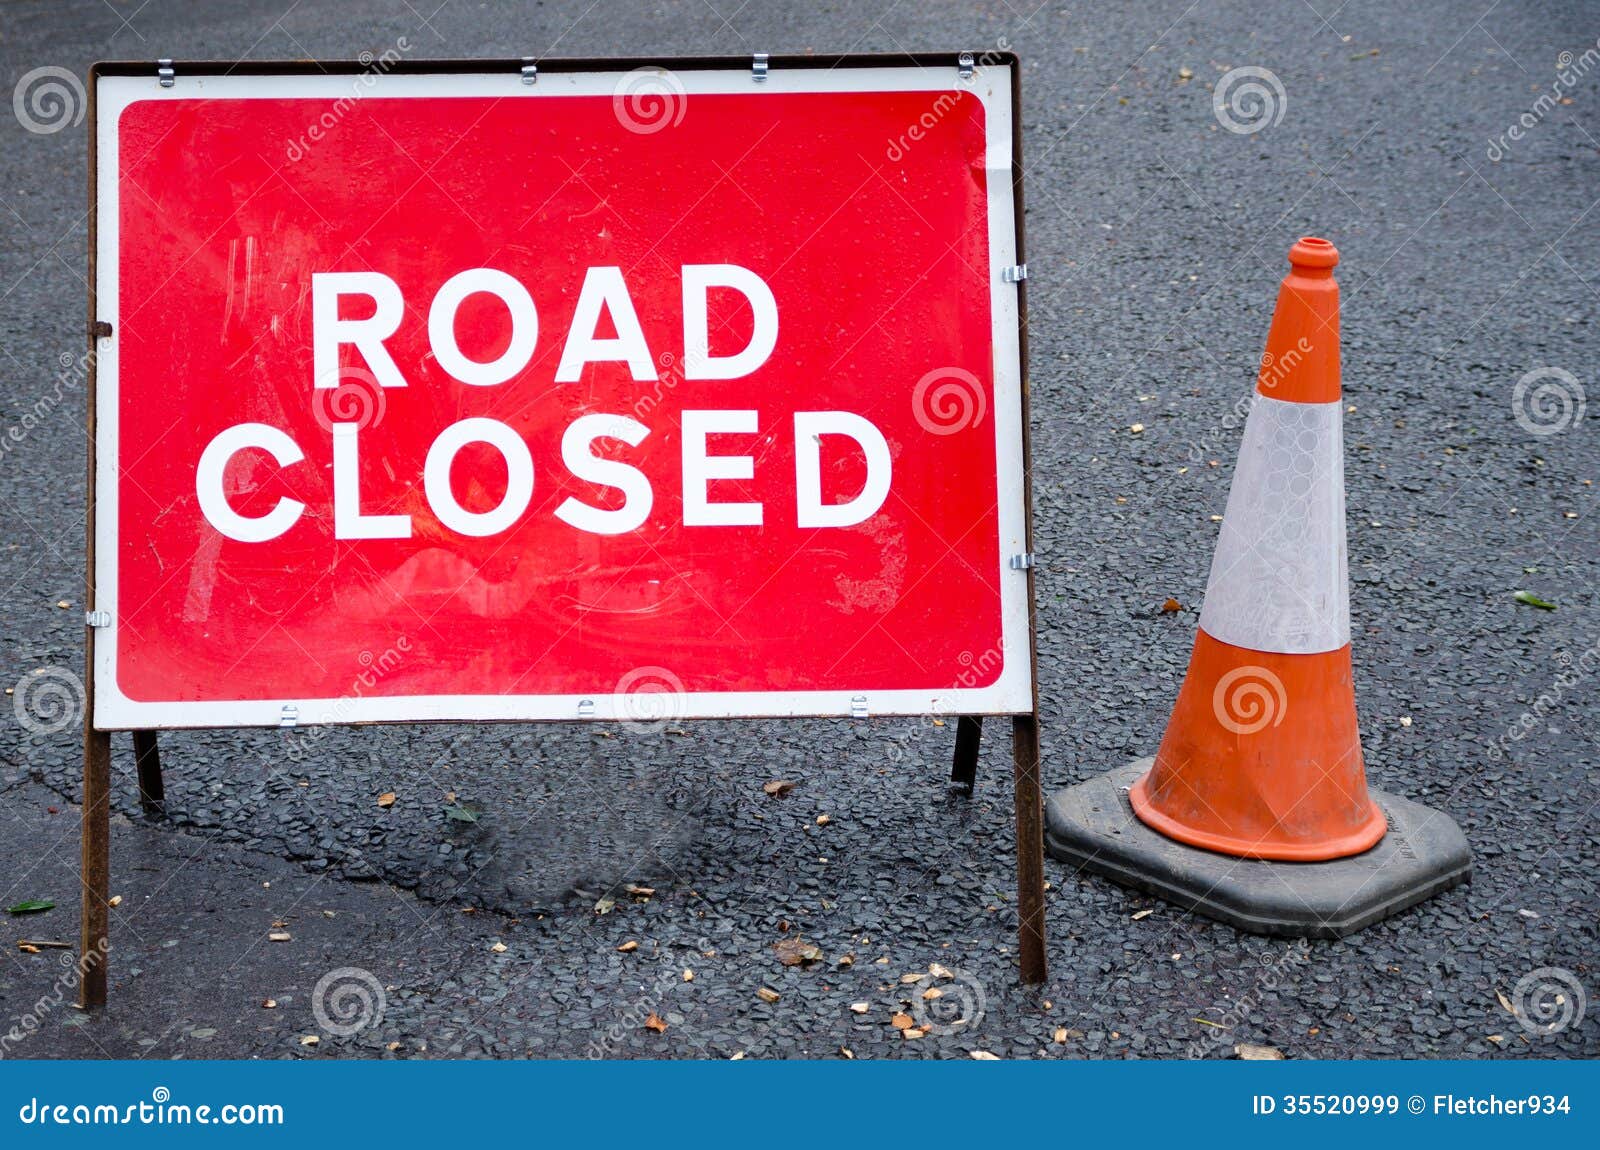 road closed sign